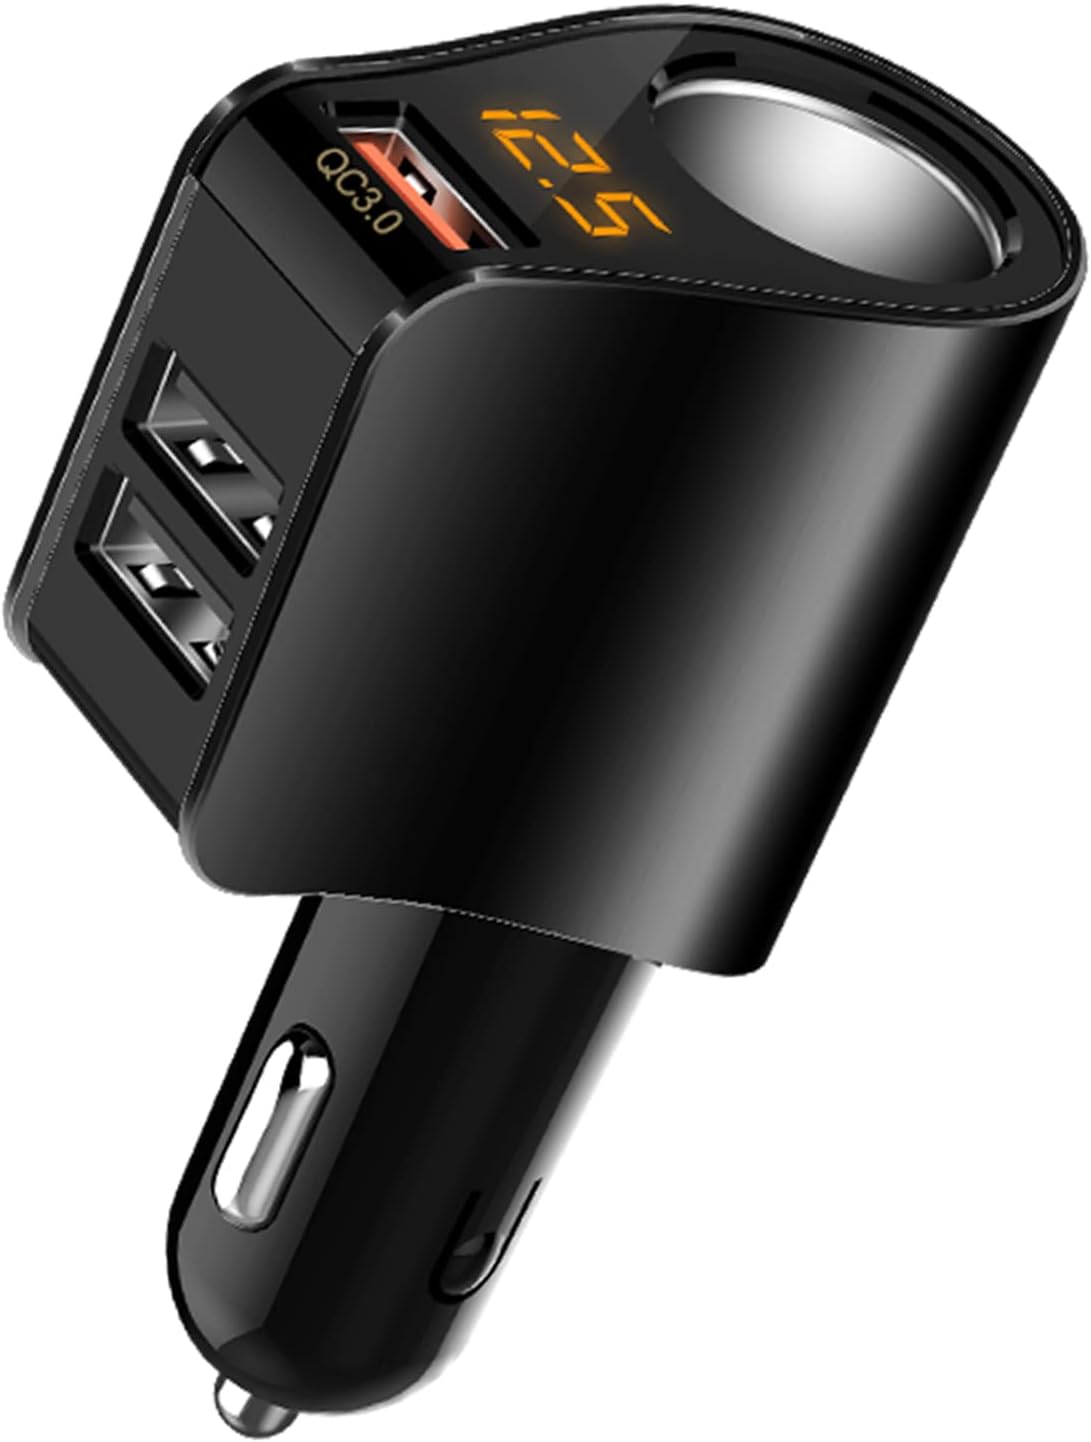 LIHAN Cigarette Lighter Socket Adapter, Car Charger QC3.0, 12V/24V Outlet Plug Splitter with Multi USB Ports, Voltmeter Compatible for iPhone, Galaxy, GPS